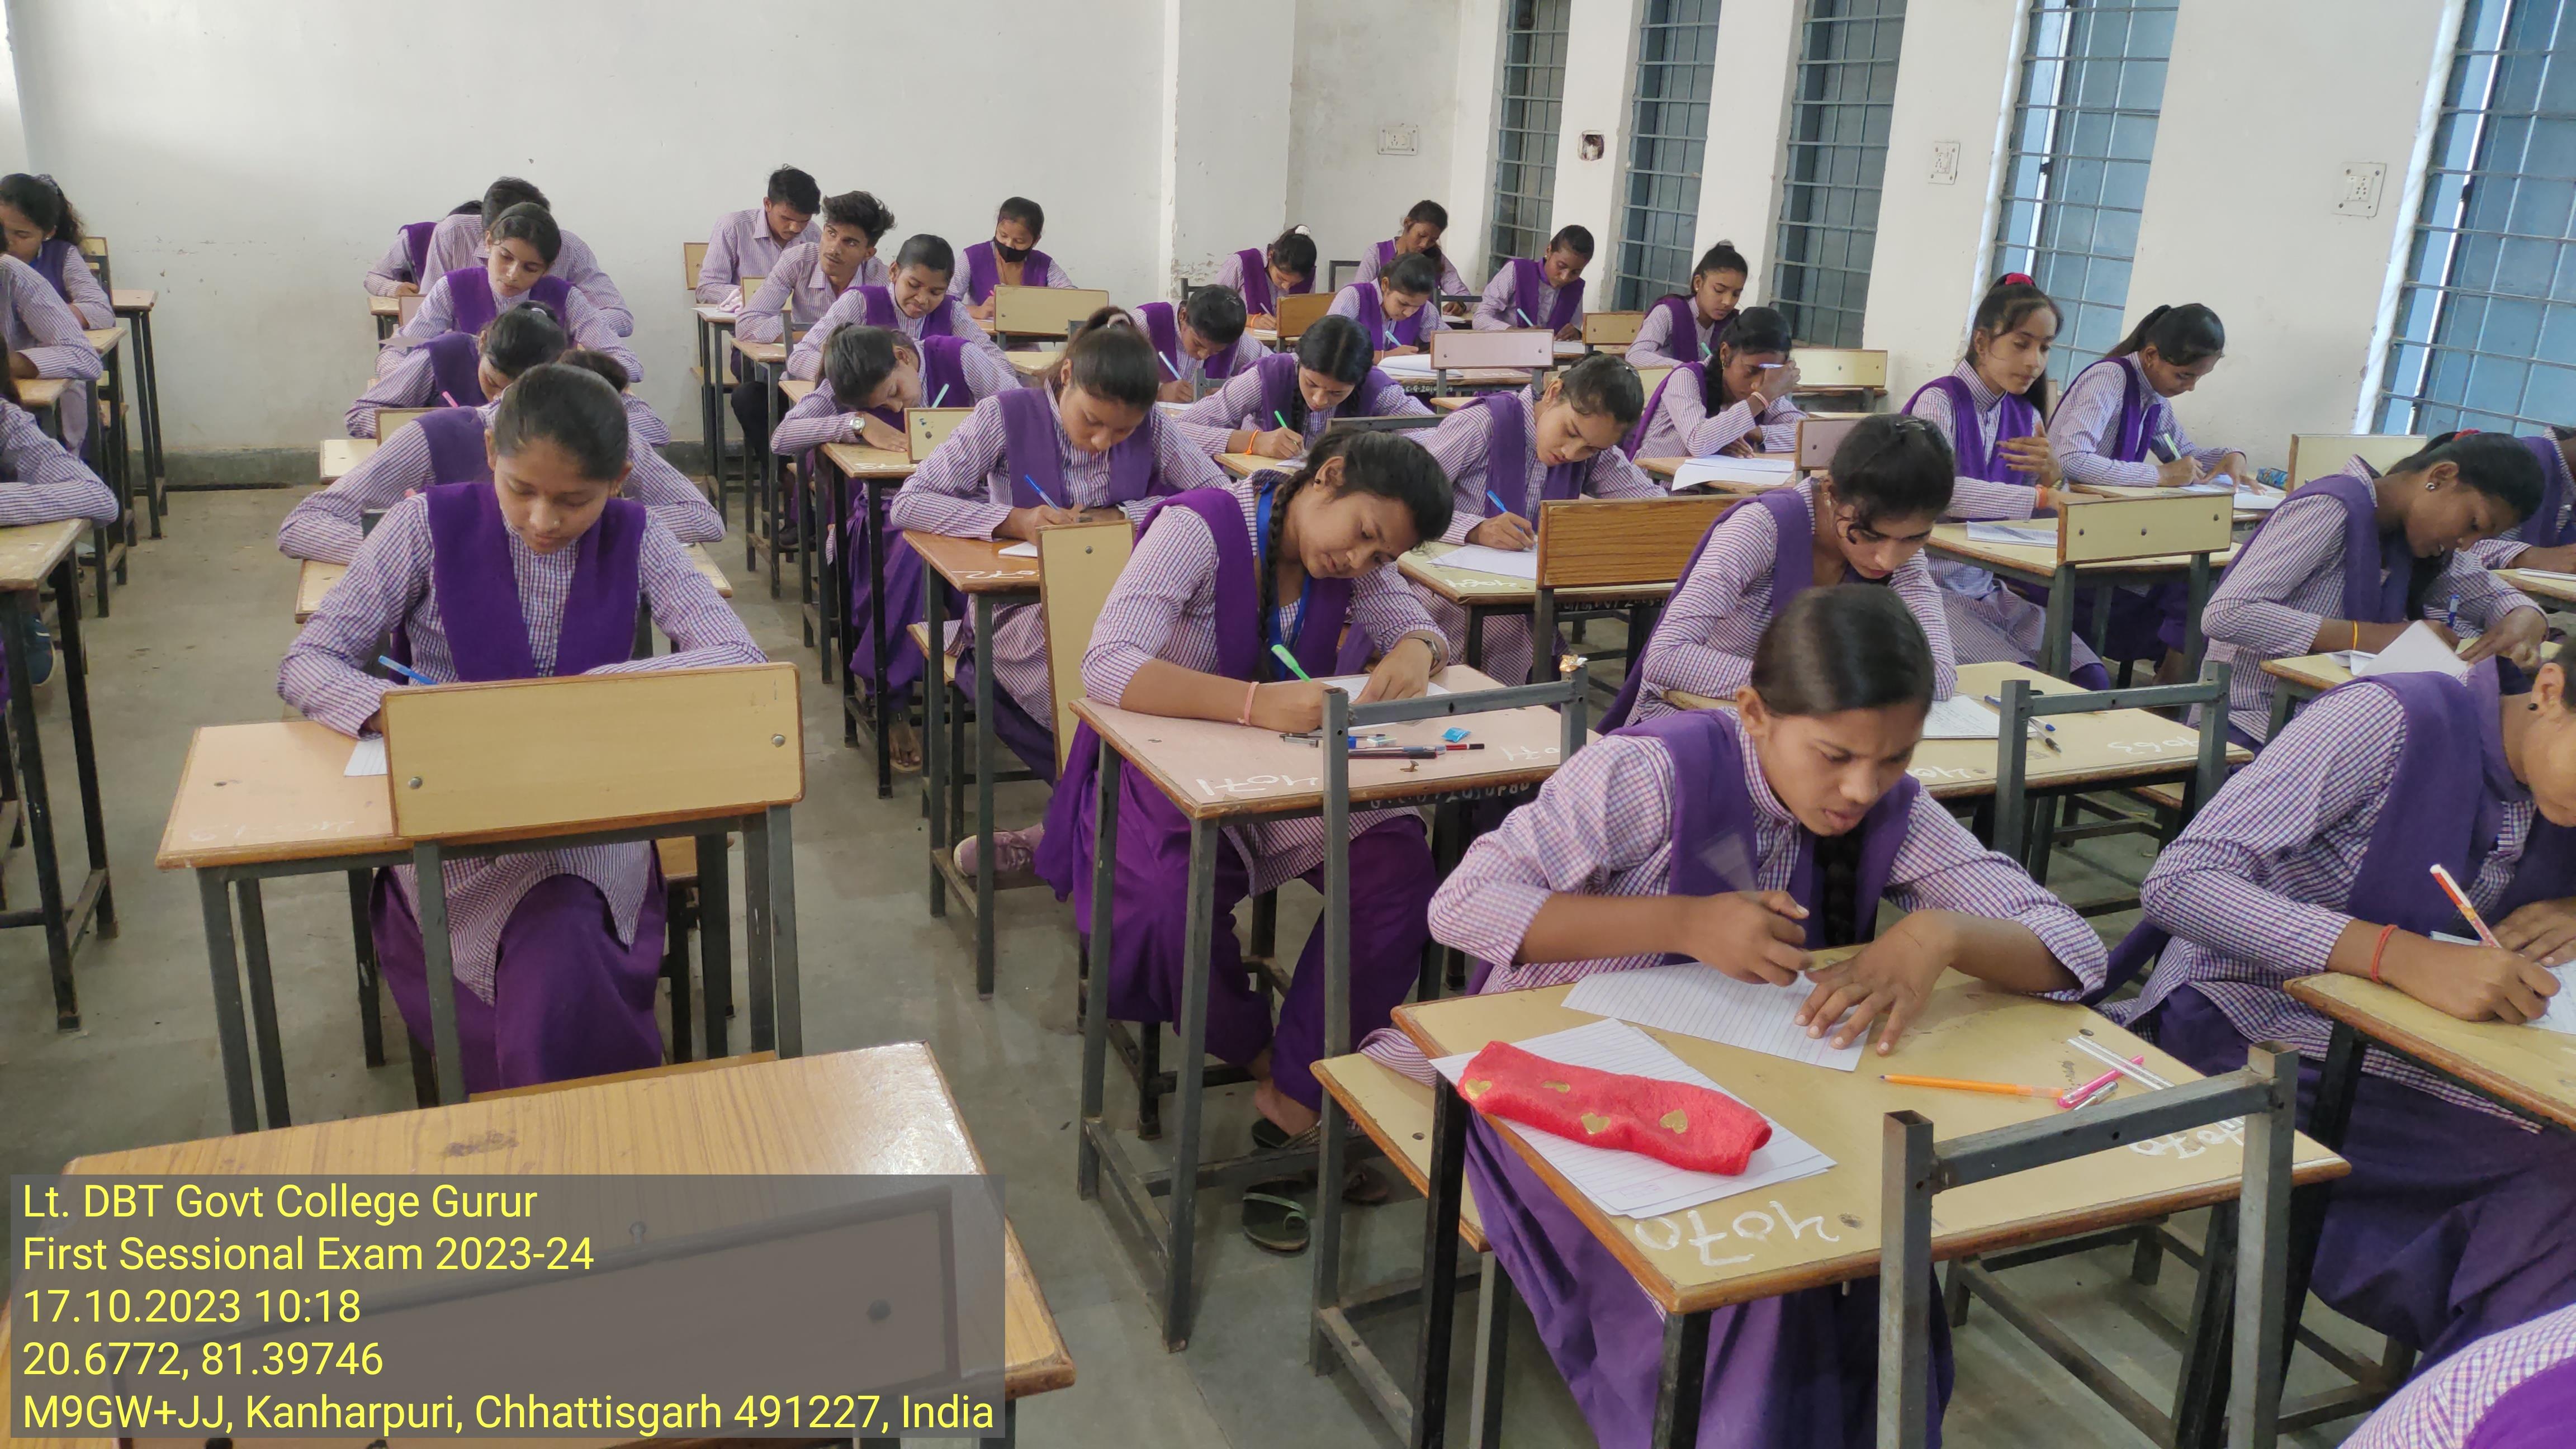 First Sessional Exam 2023-24 - Photo Govt. college Gurur